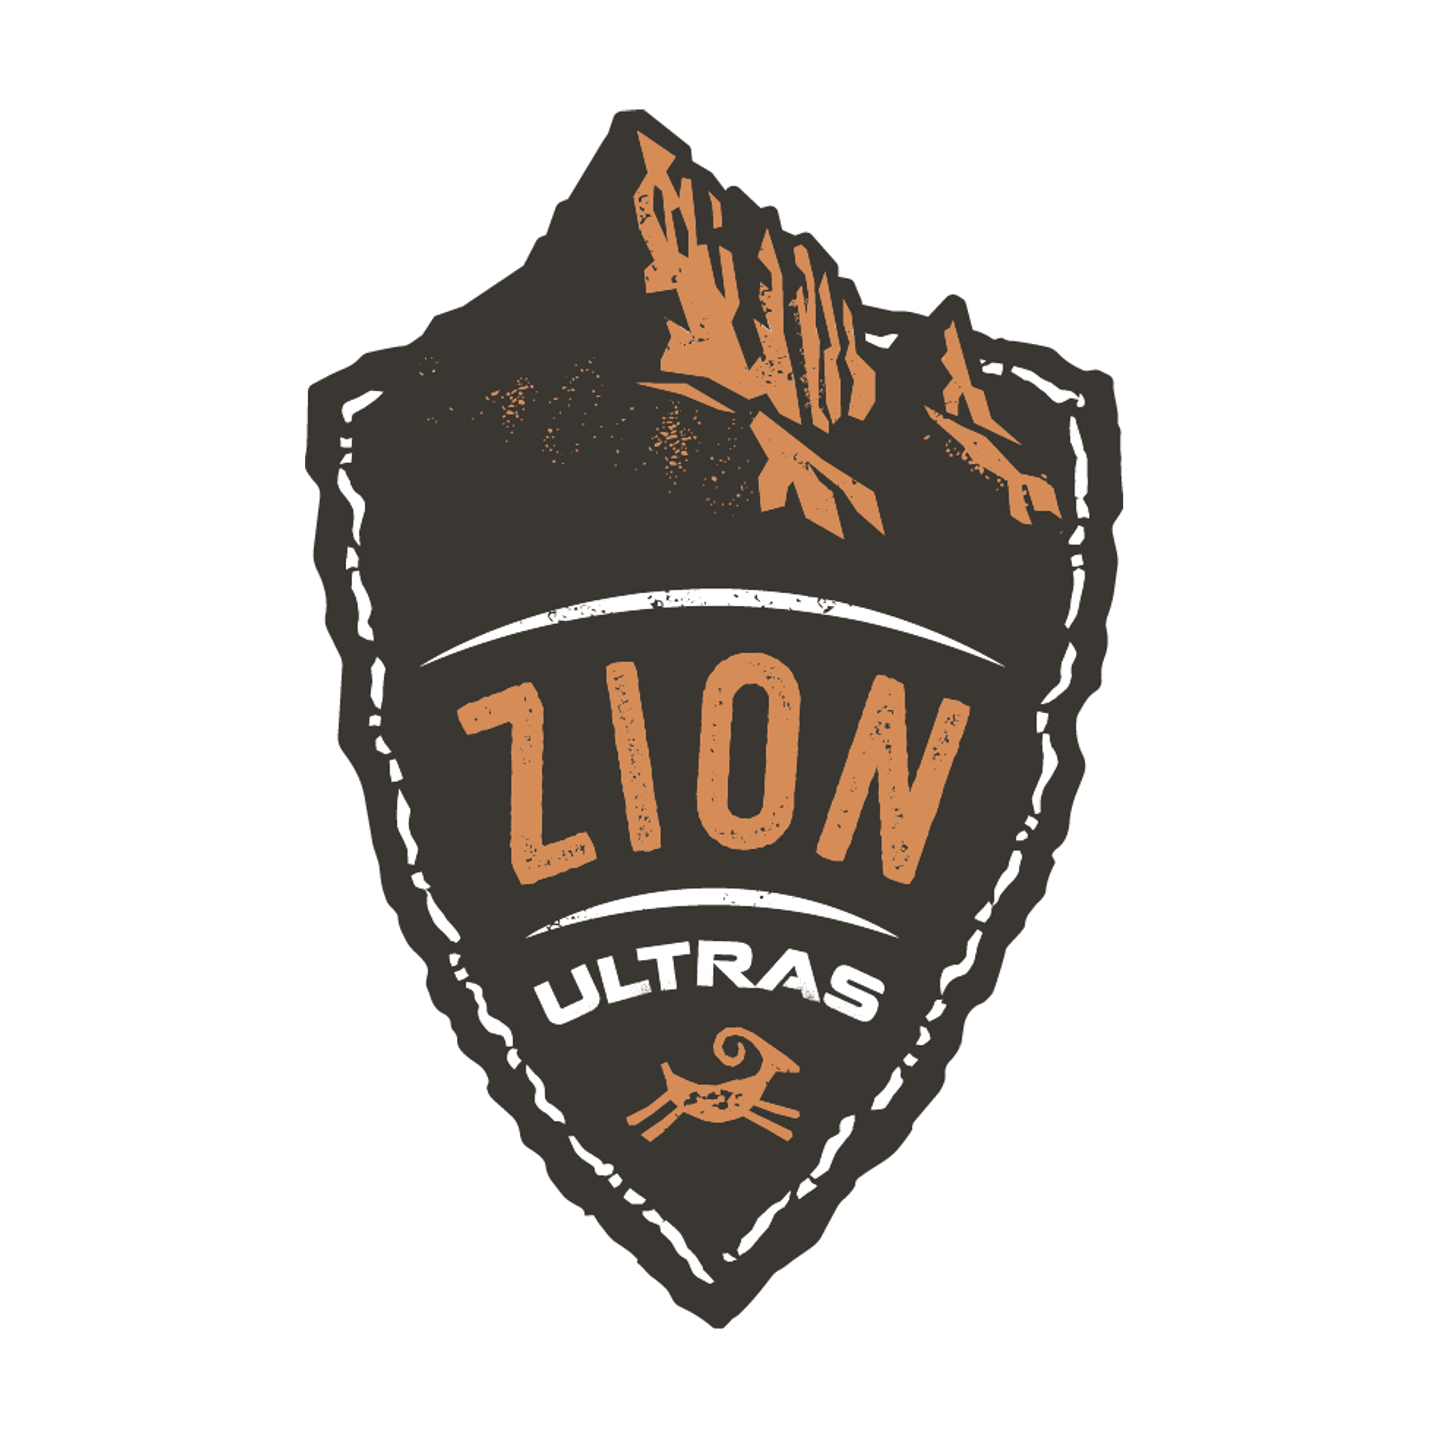 Logo-Zion Ultra Marathons